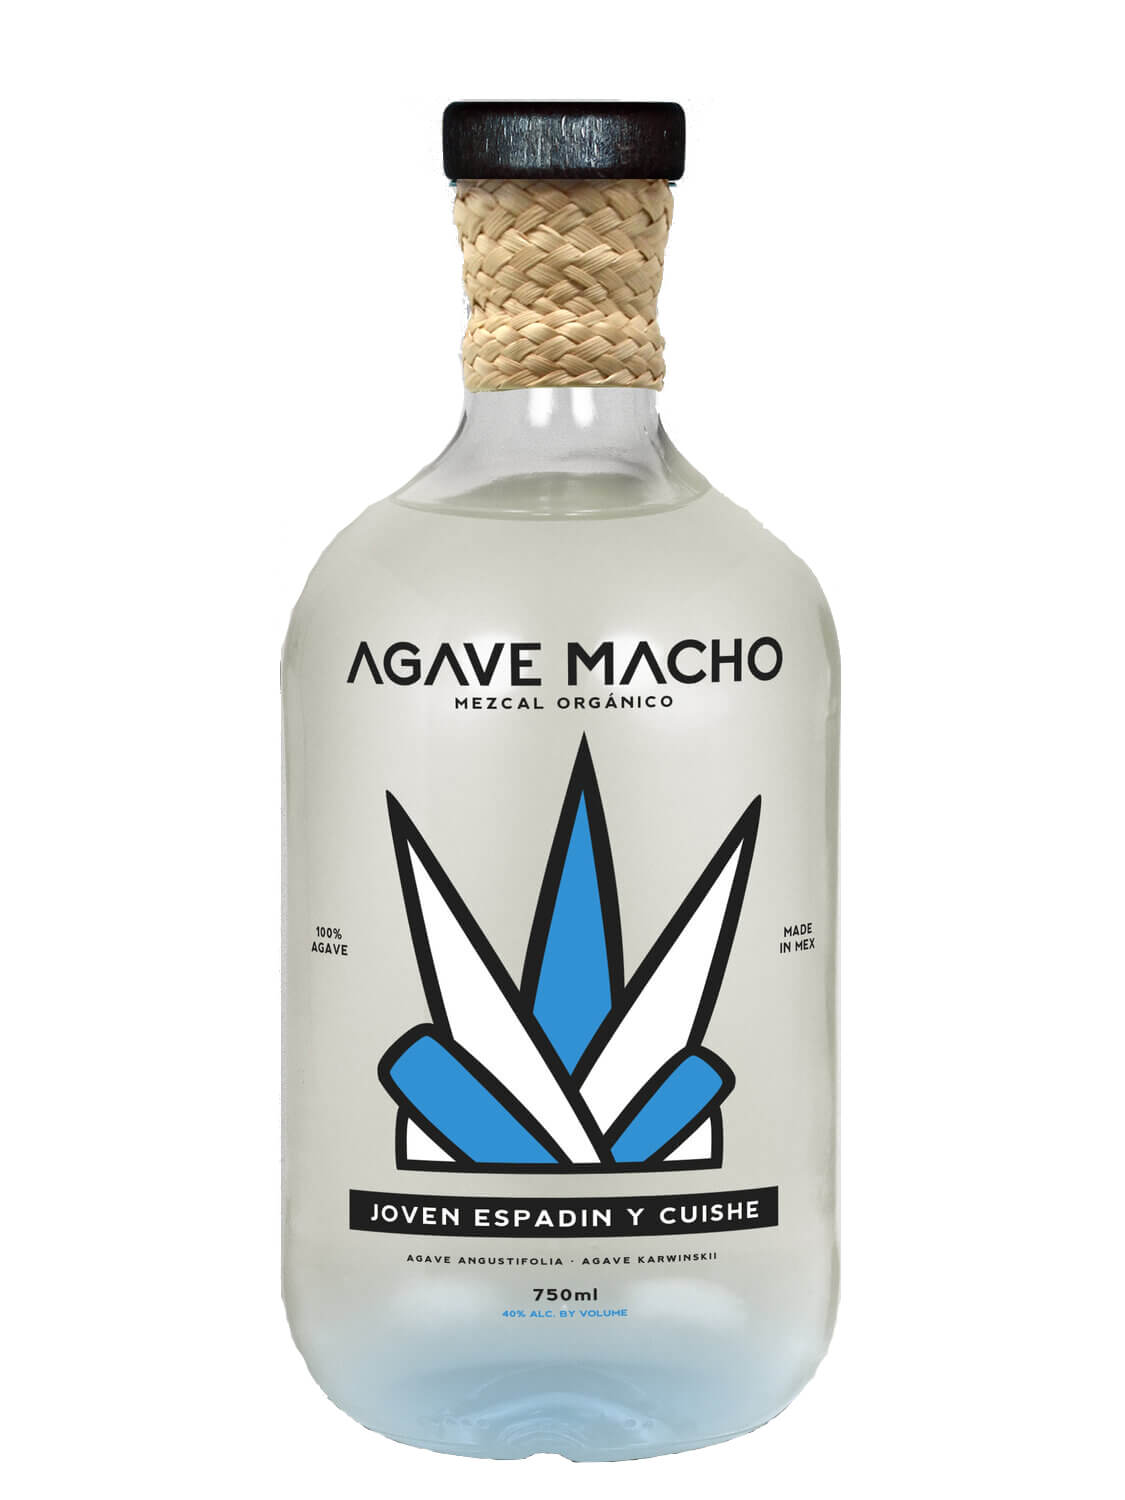 A bottle of Agave Macho Espadin-Cuishe ensamble joven mezcal